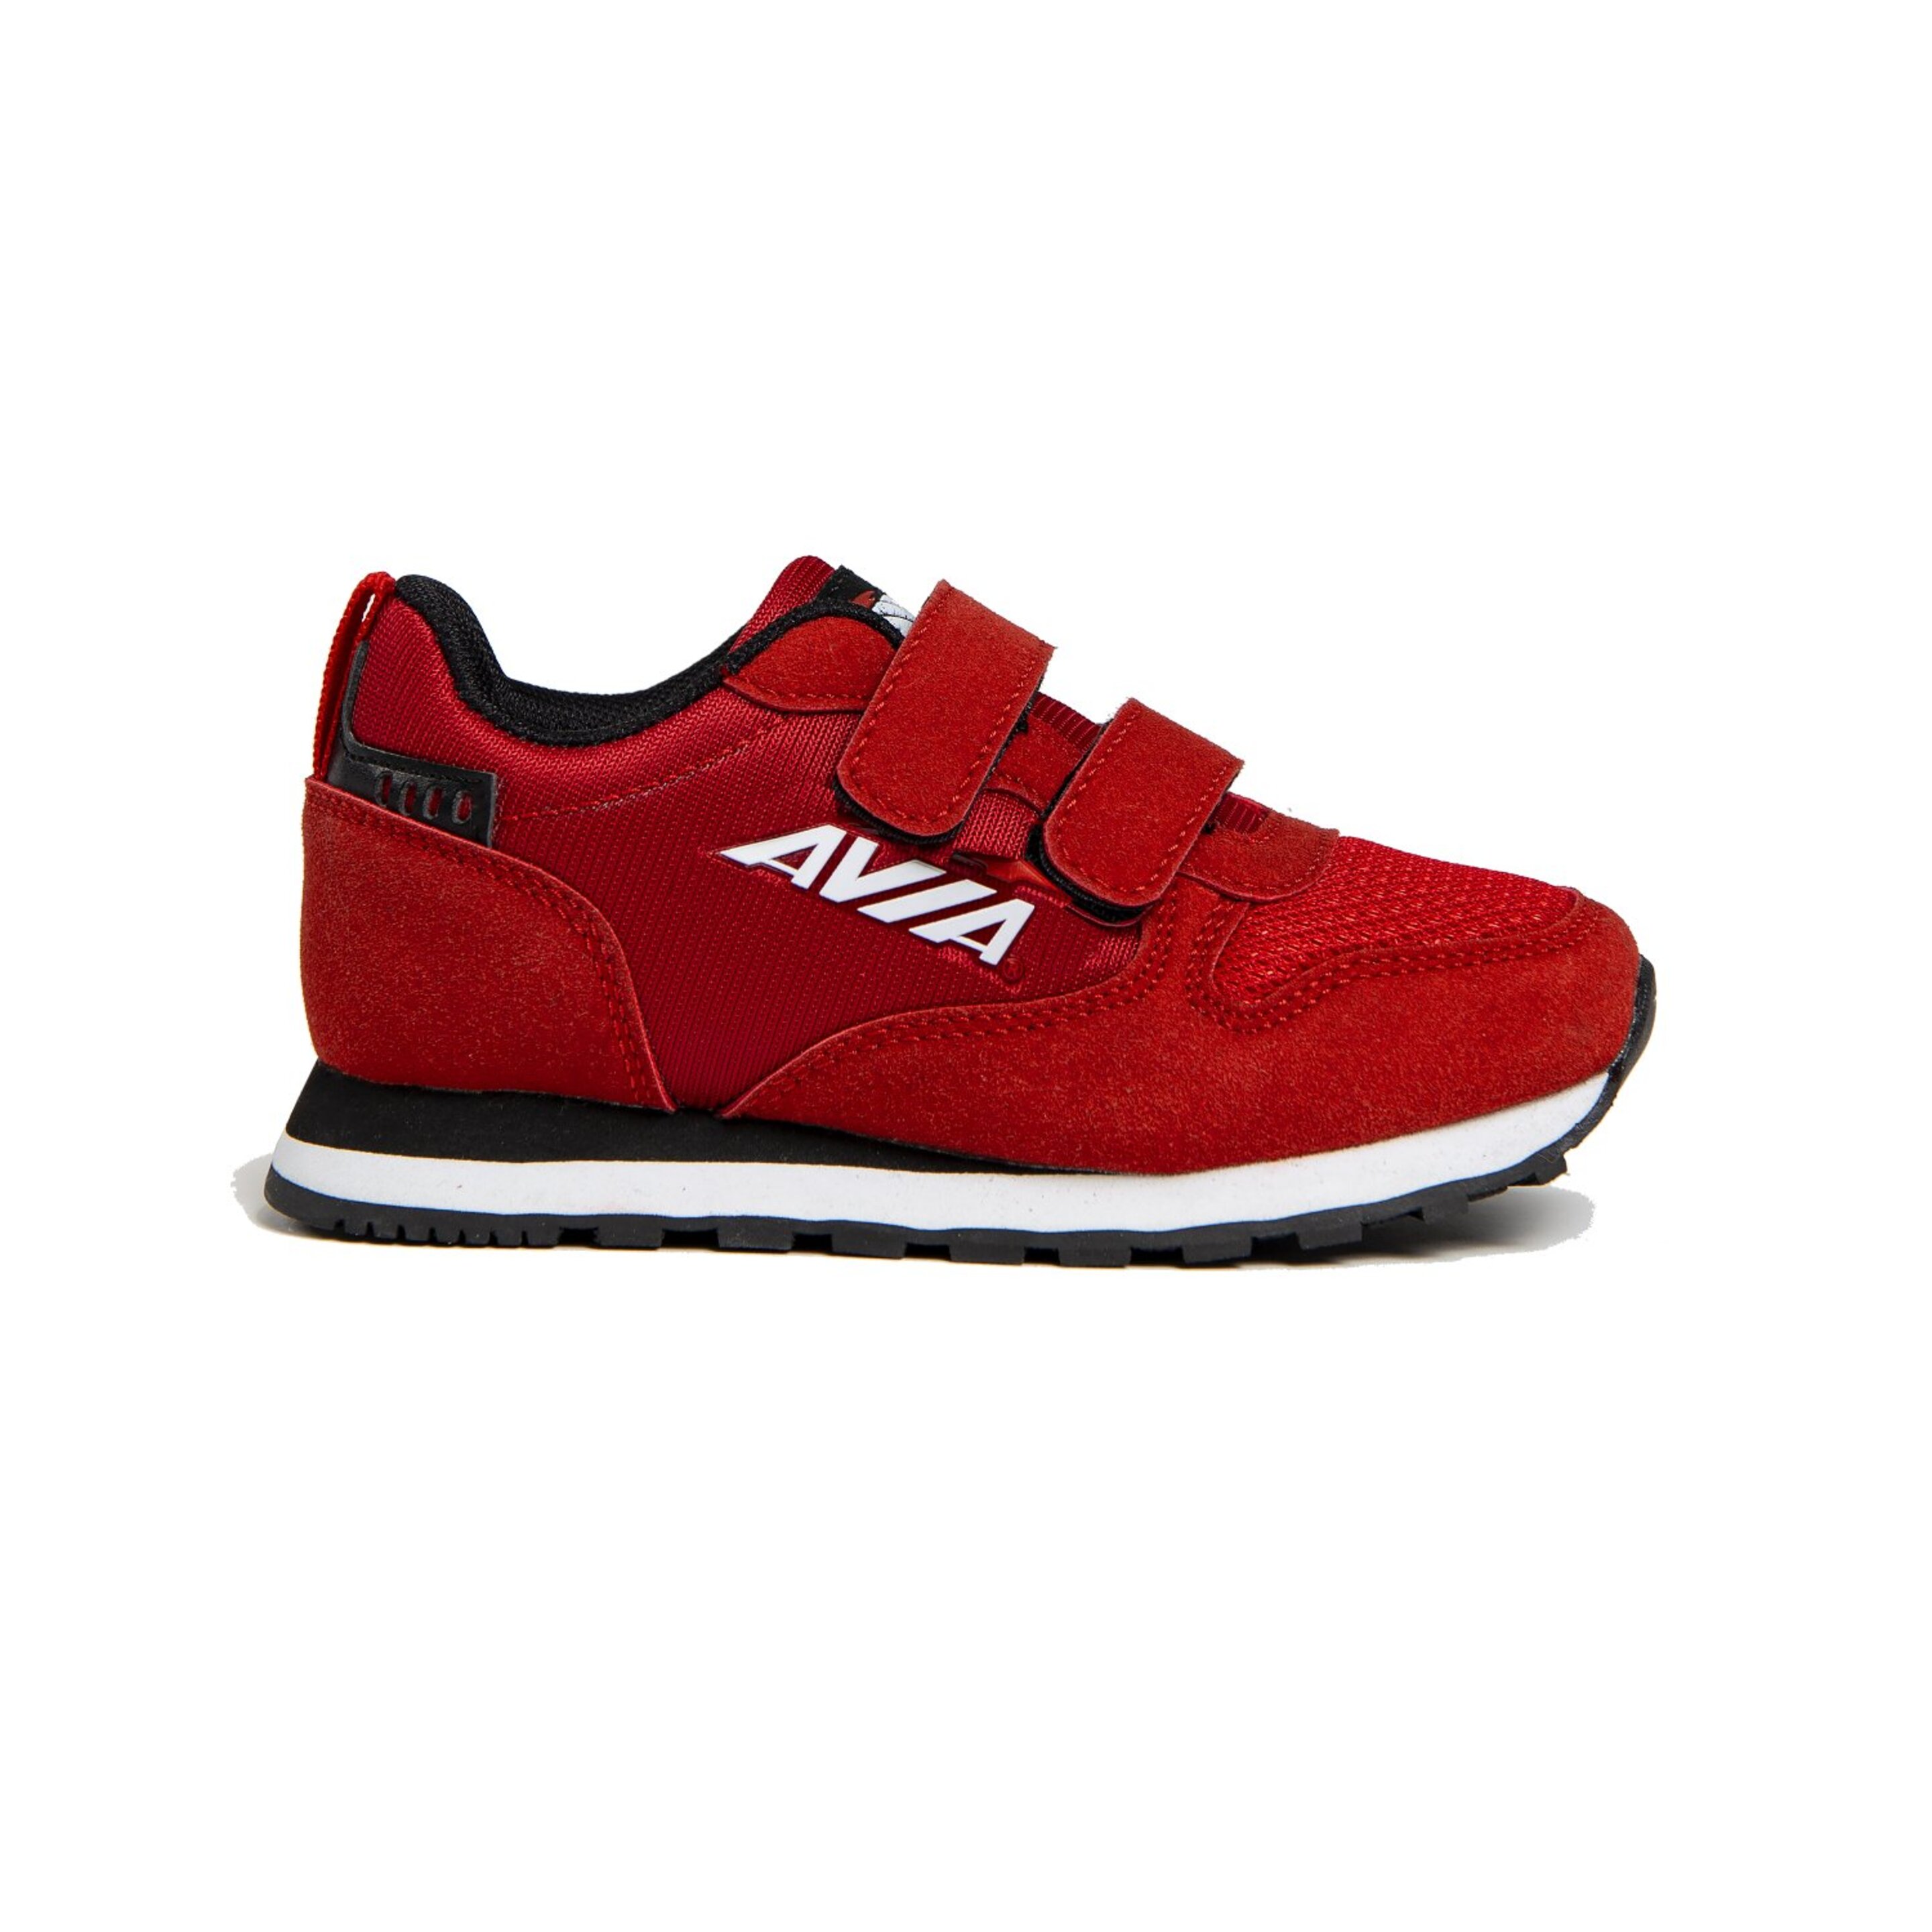 Zapatillas Jogging Avia Basico - rojo - 